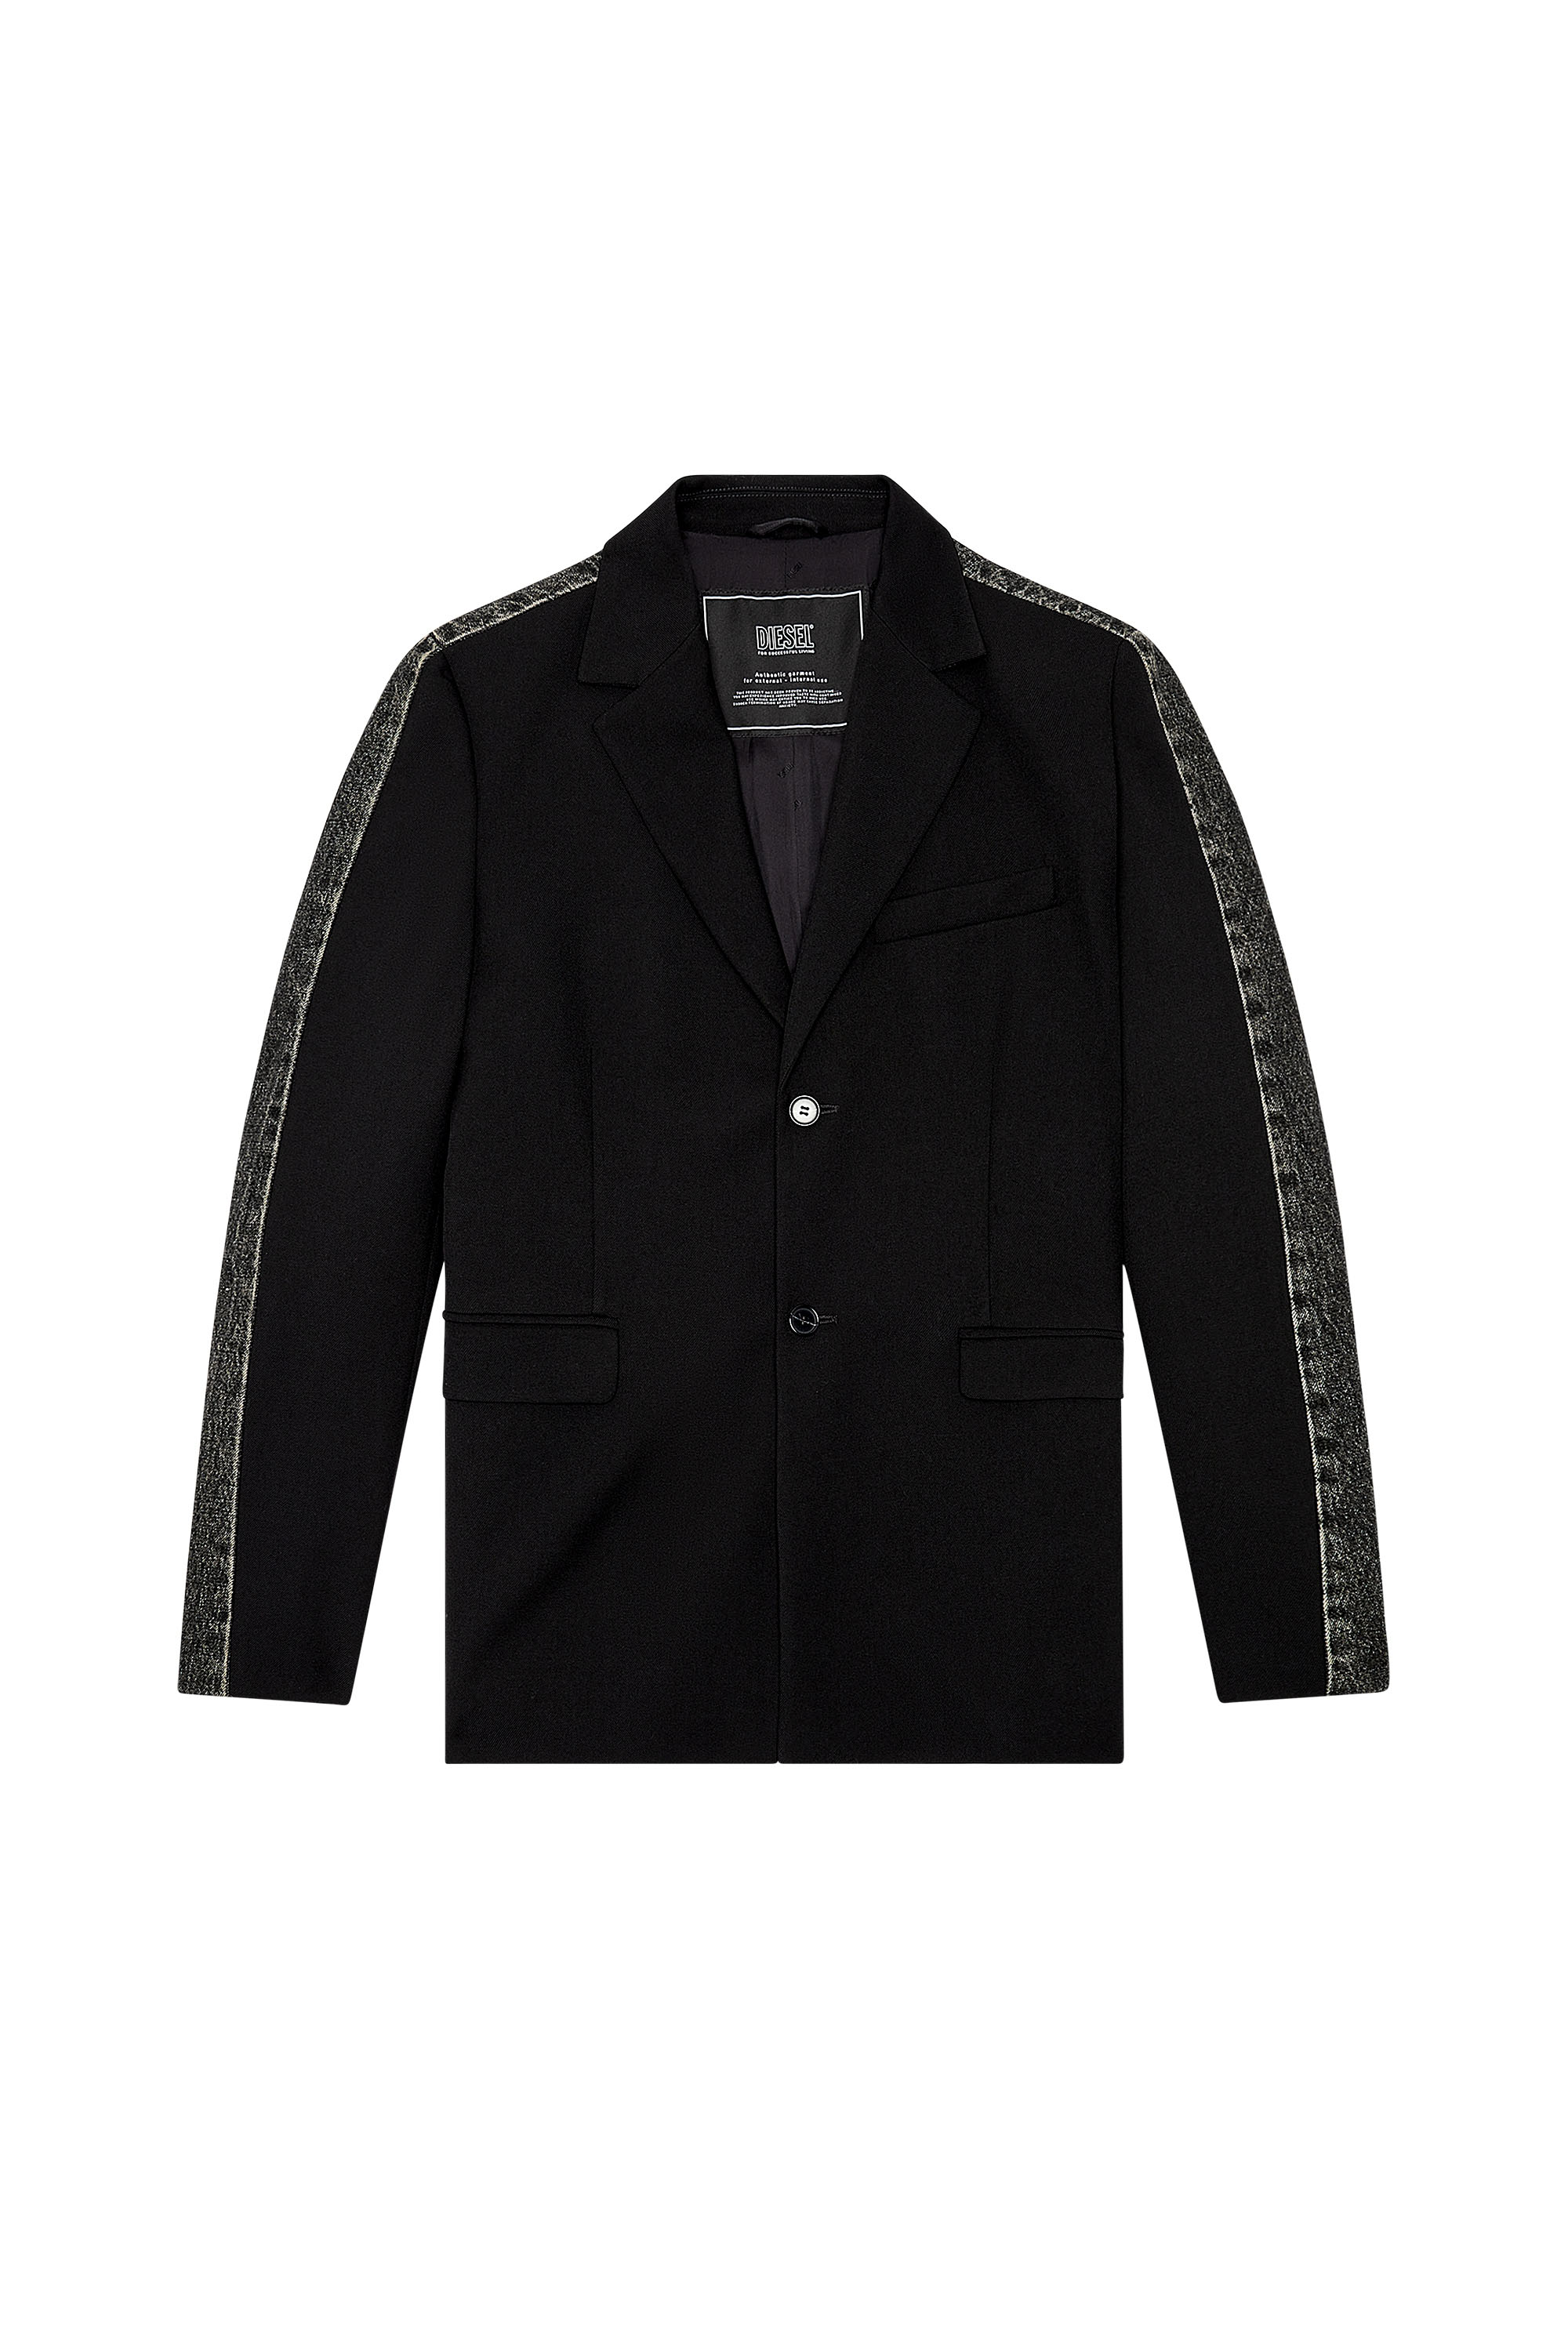 Diesel - J-WIRE-A, Man Hybrid blazer in cool wool and denim in Black - Image 3